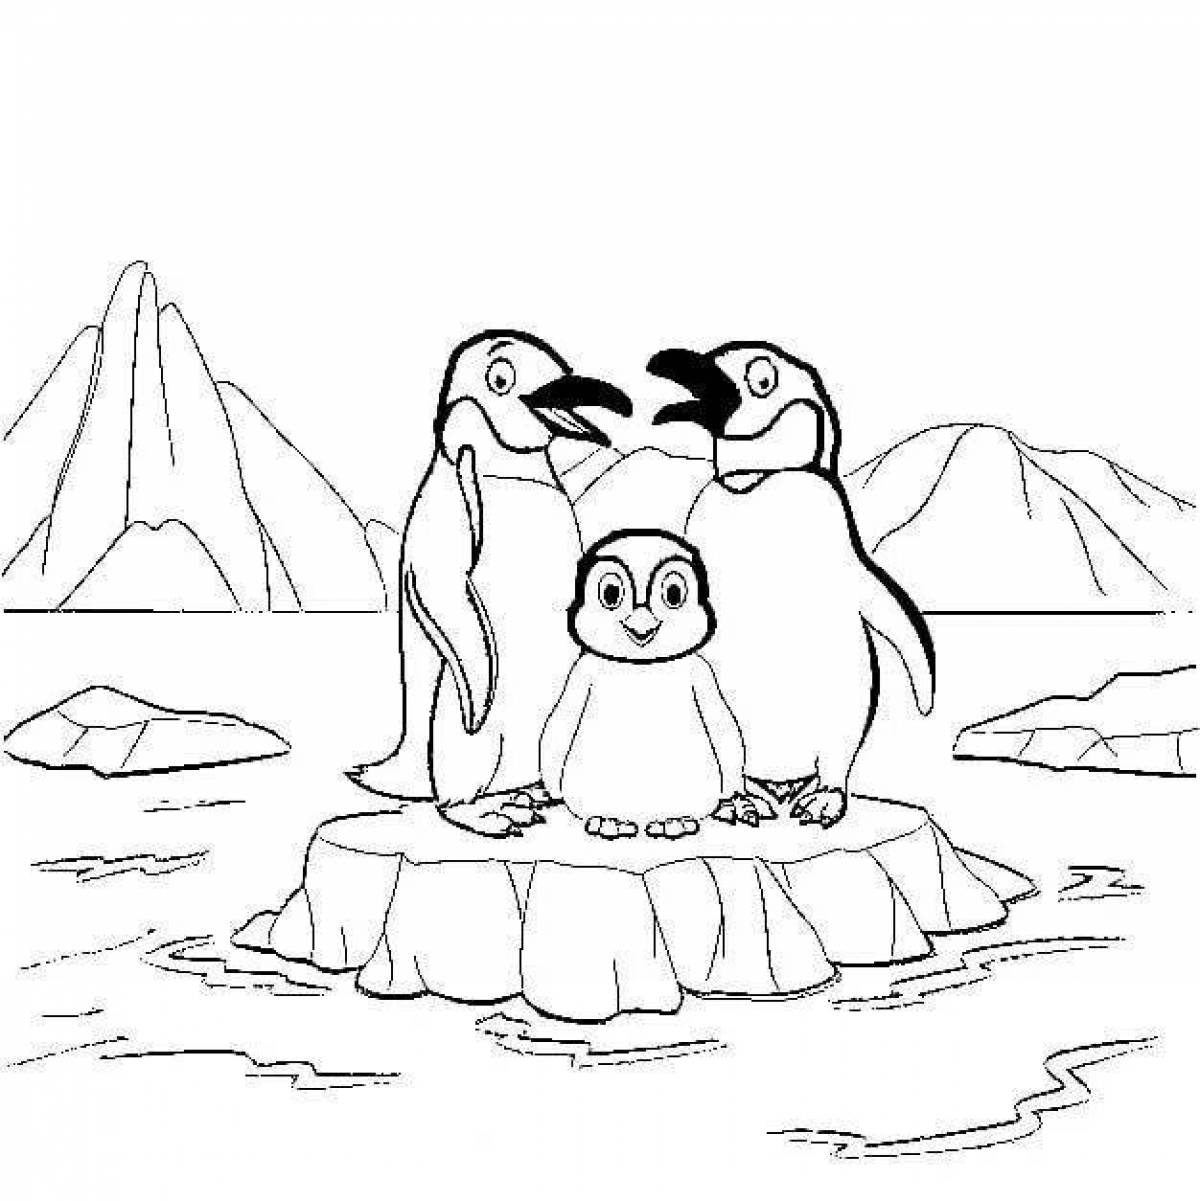 Penguin on an ice float #5